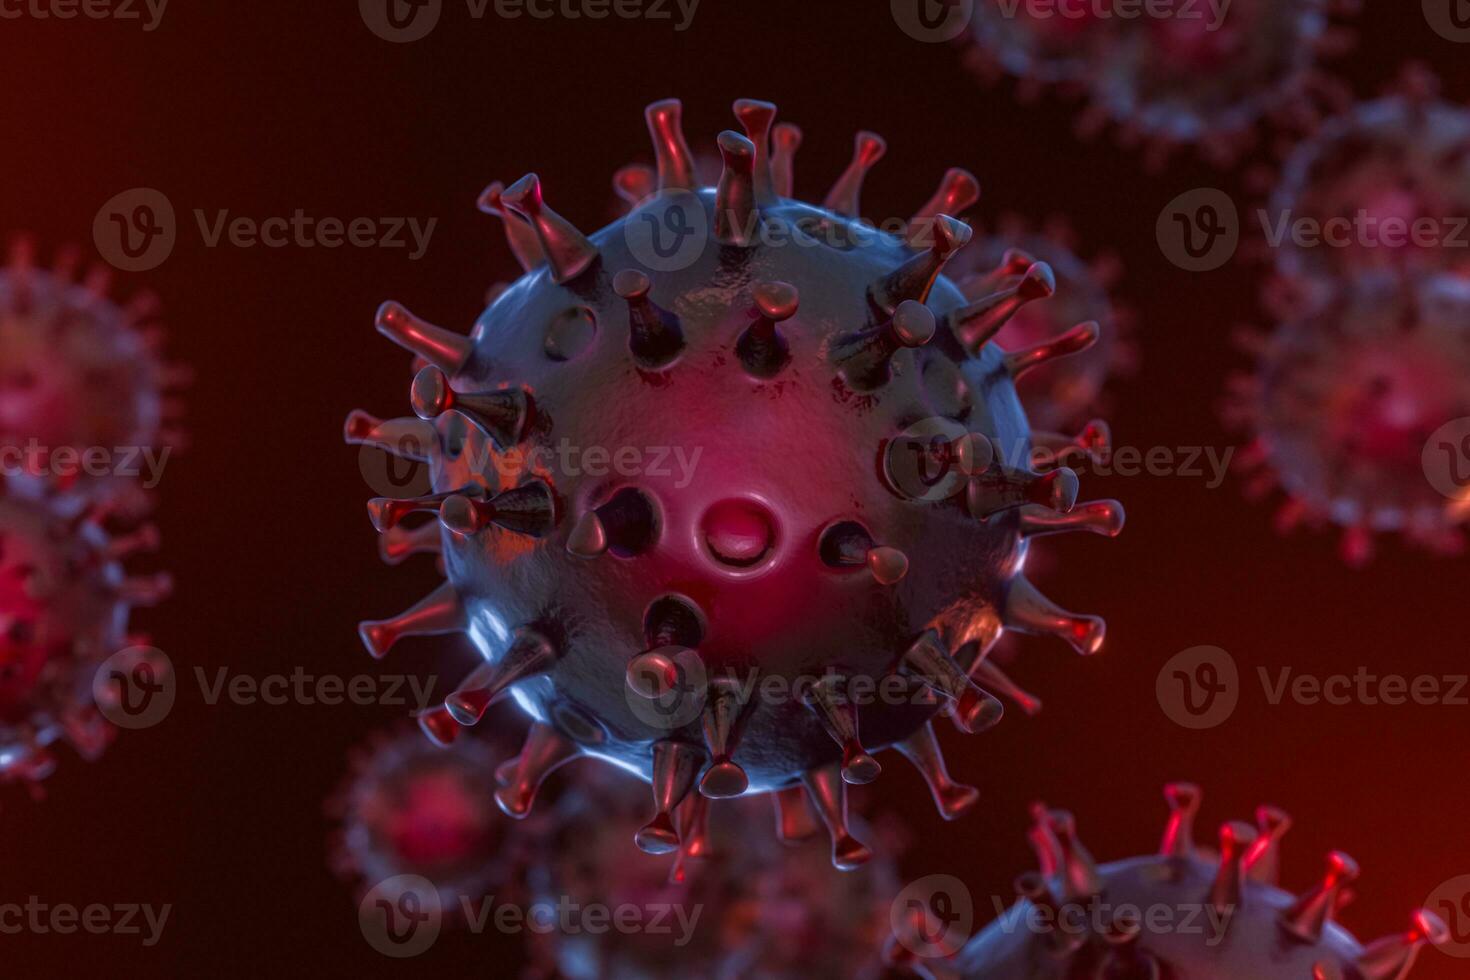 Dispersed corona viruses with dark background, 3d rendering photo